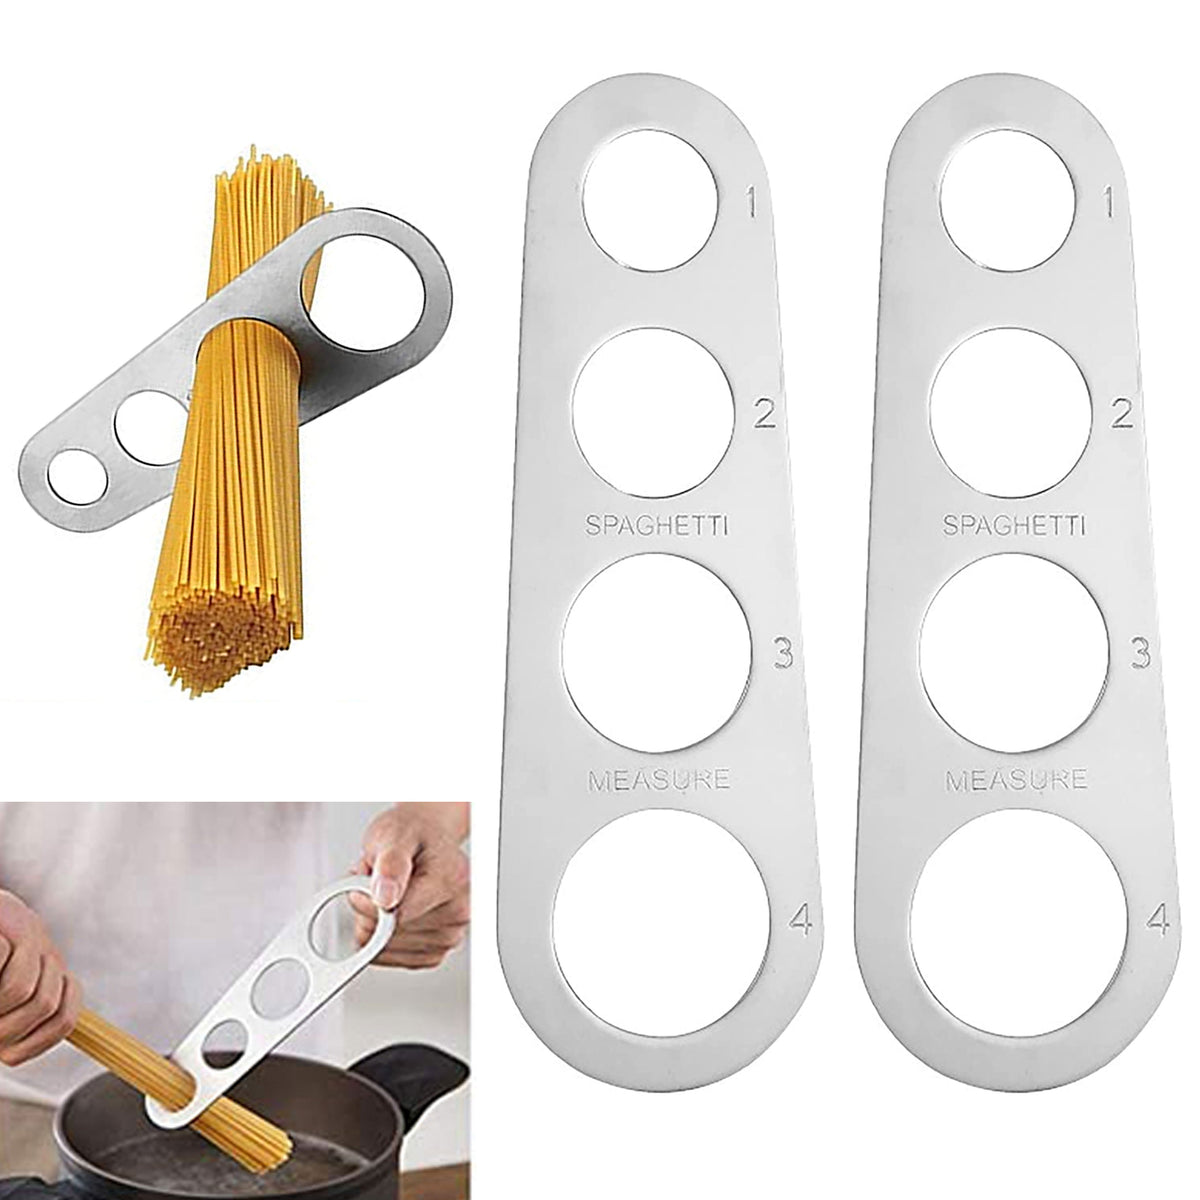 3 Pieces Stainless Steel Spaghetti Server Set, Stainless Steel Spaghetti Pasta Tong, Pasta Spoon Server Fork and Spaghetti Measure Tool, Kitchen